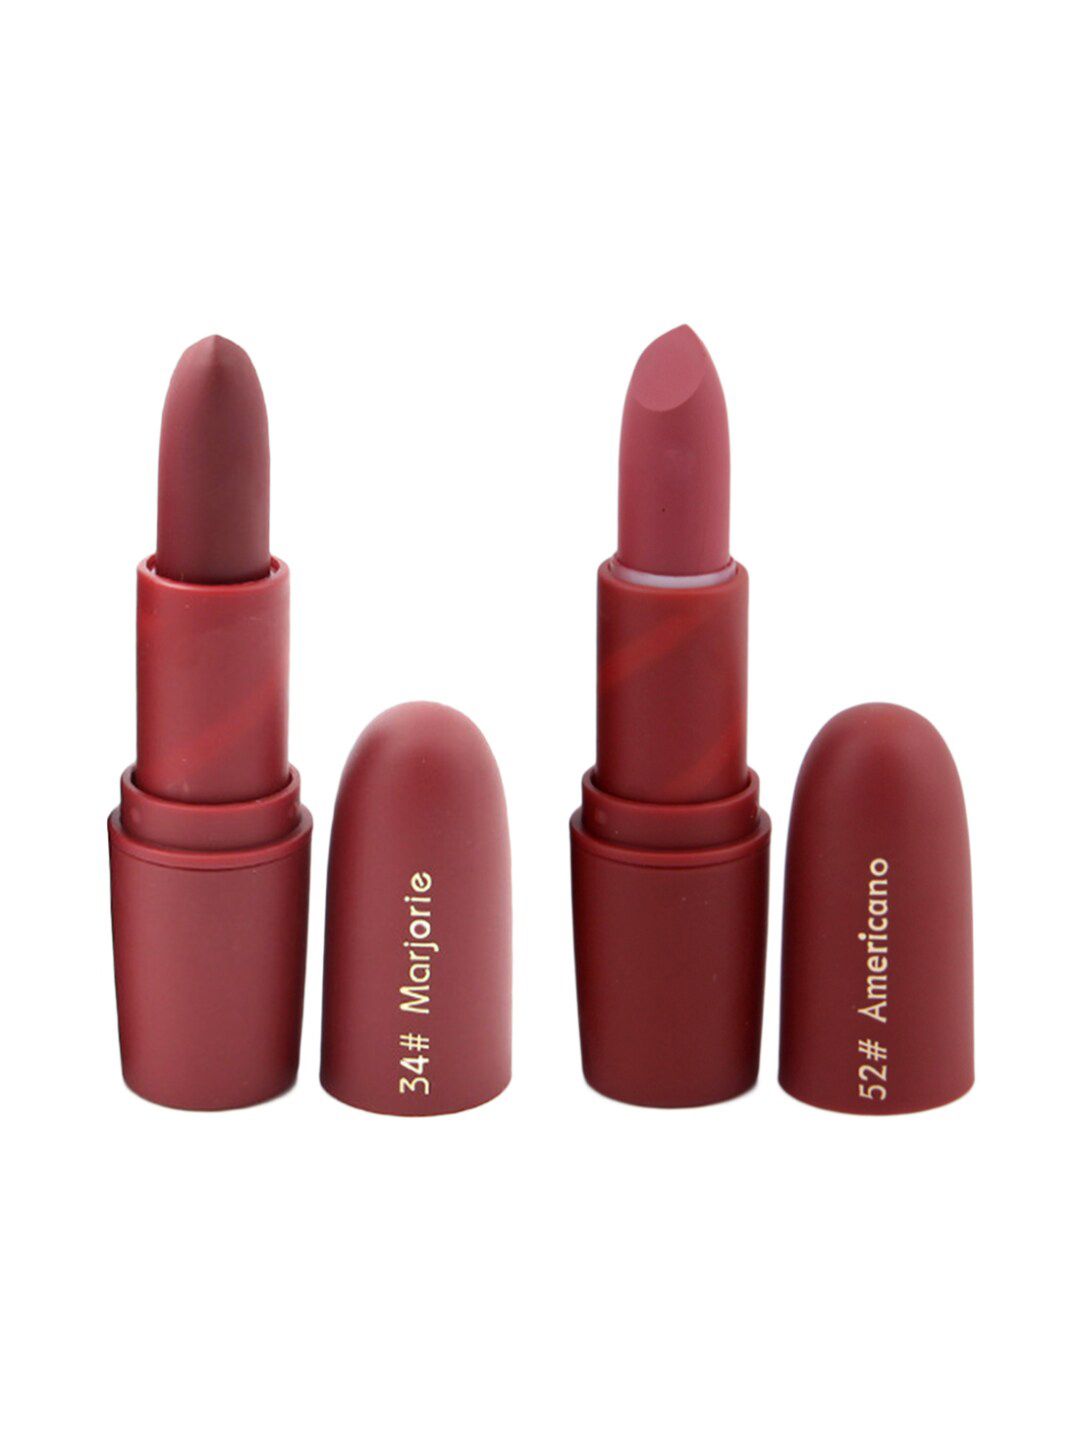 MISS ROSE Professional Make-Up Set of 2 Matte Creamy Lipsticks-Marjorie 34 & Americano 52 Price in India